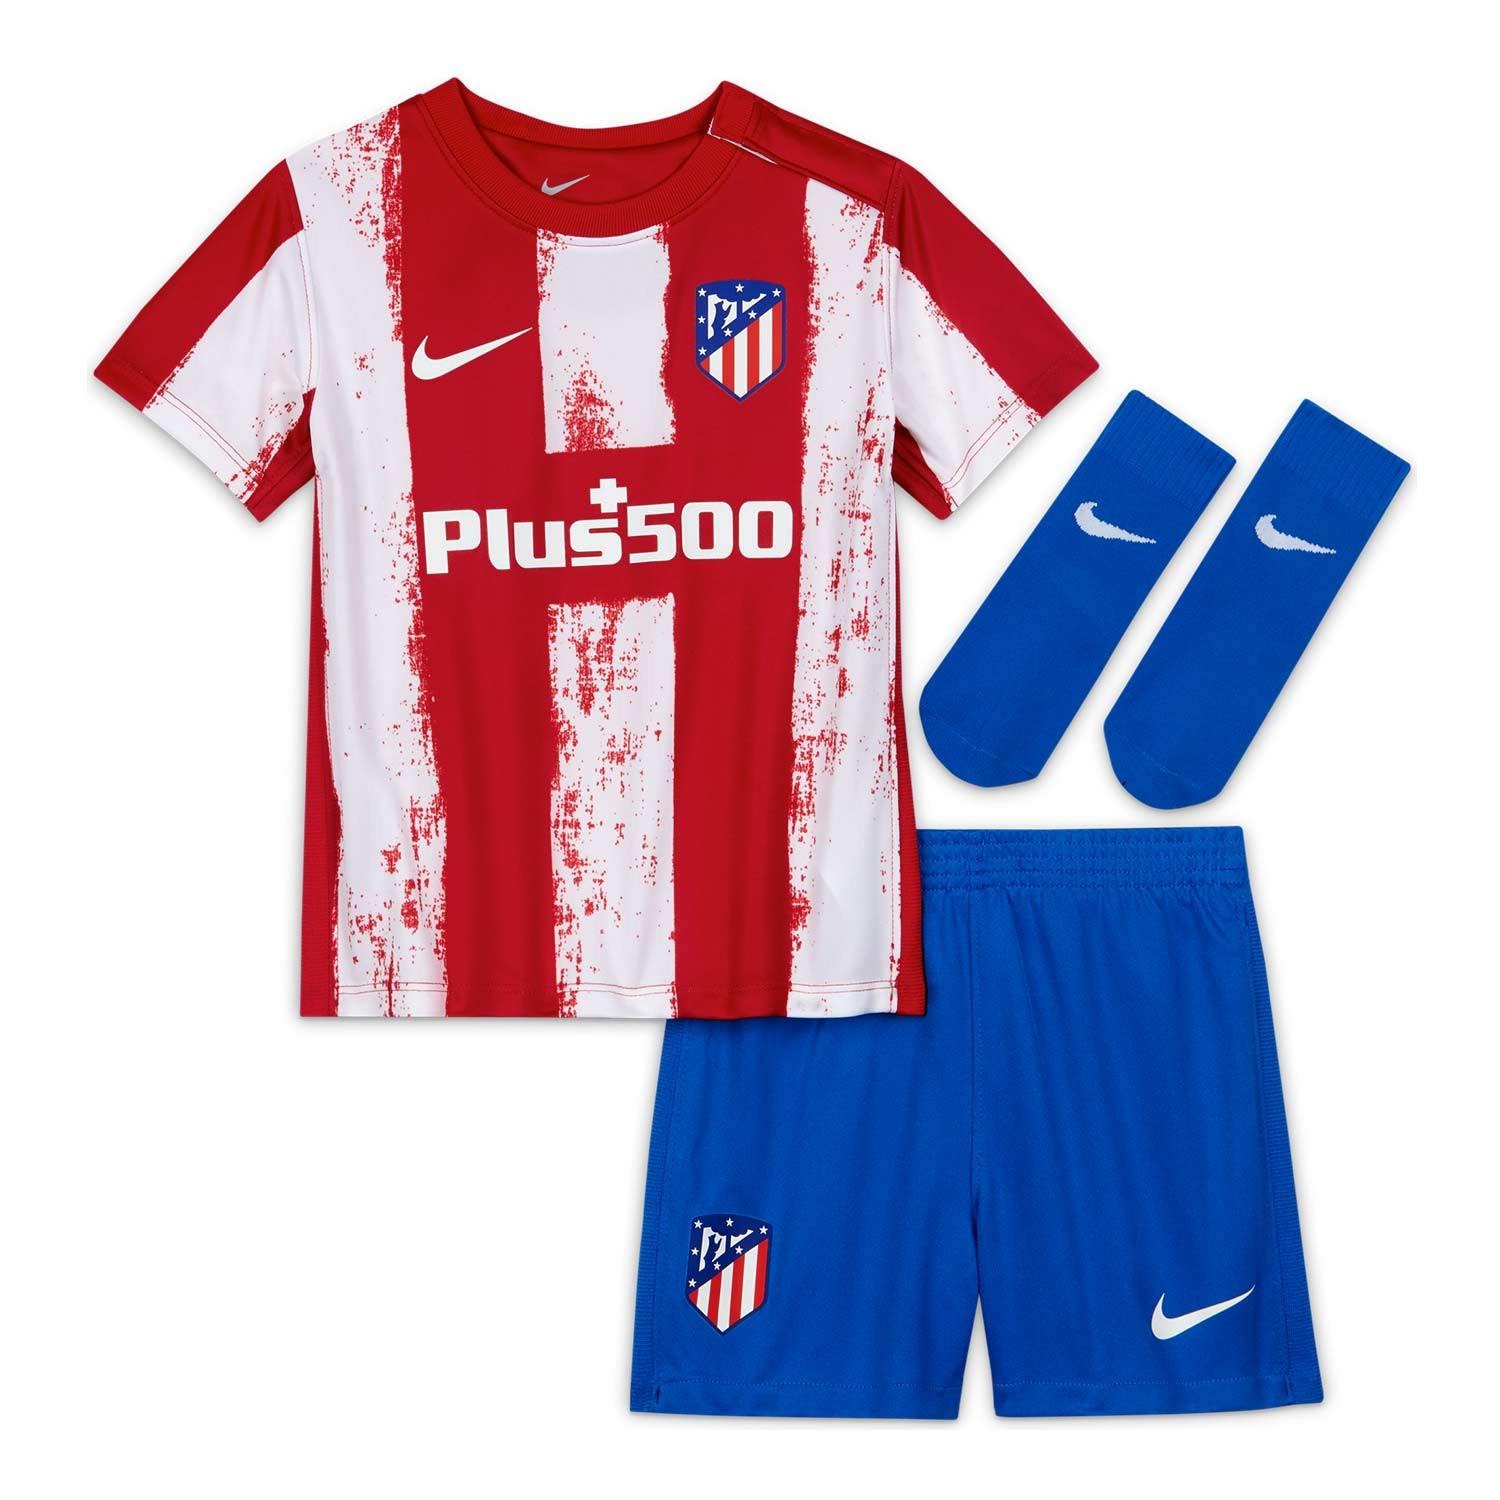 Equipación Nike Atlético bebé 3-36 meses 2021 2022